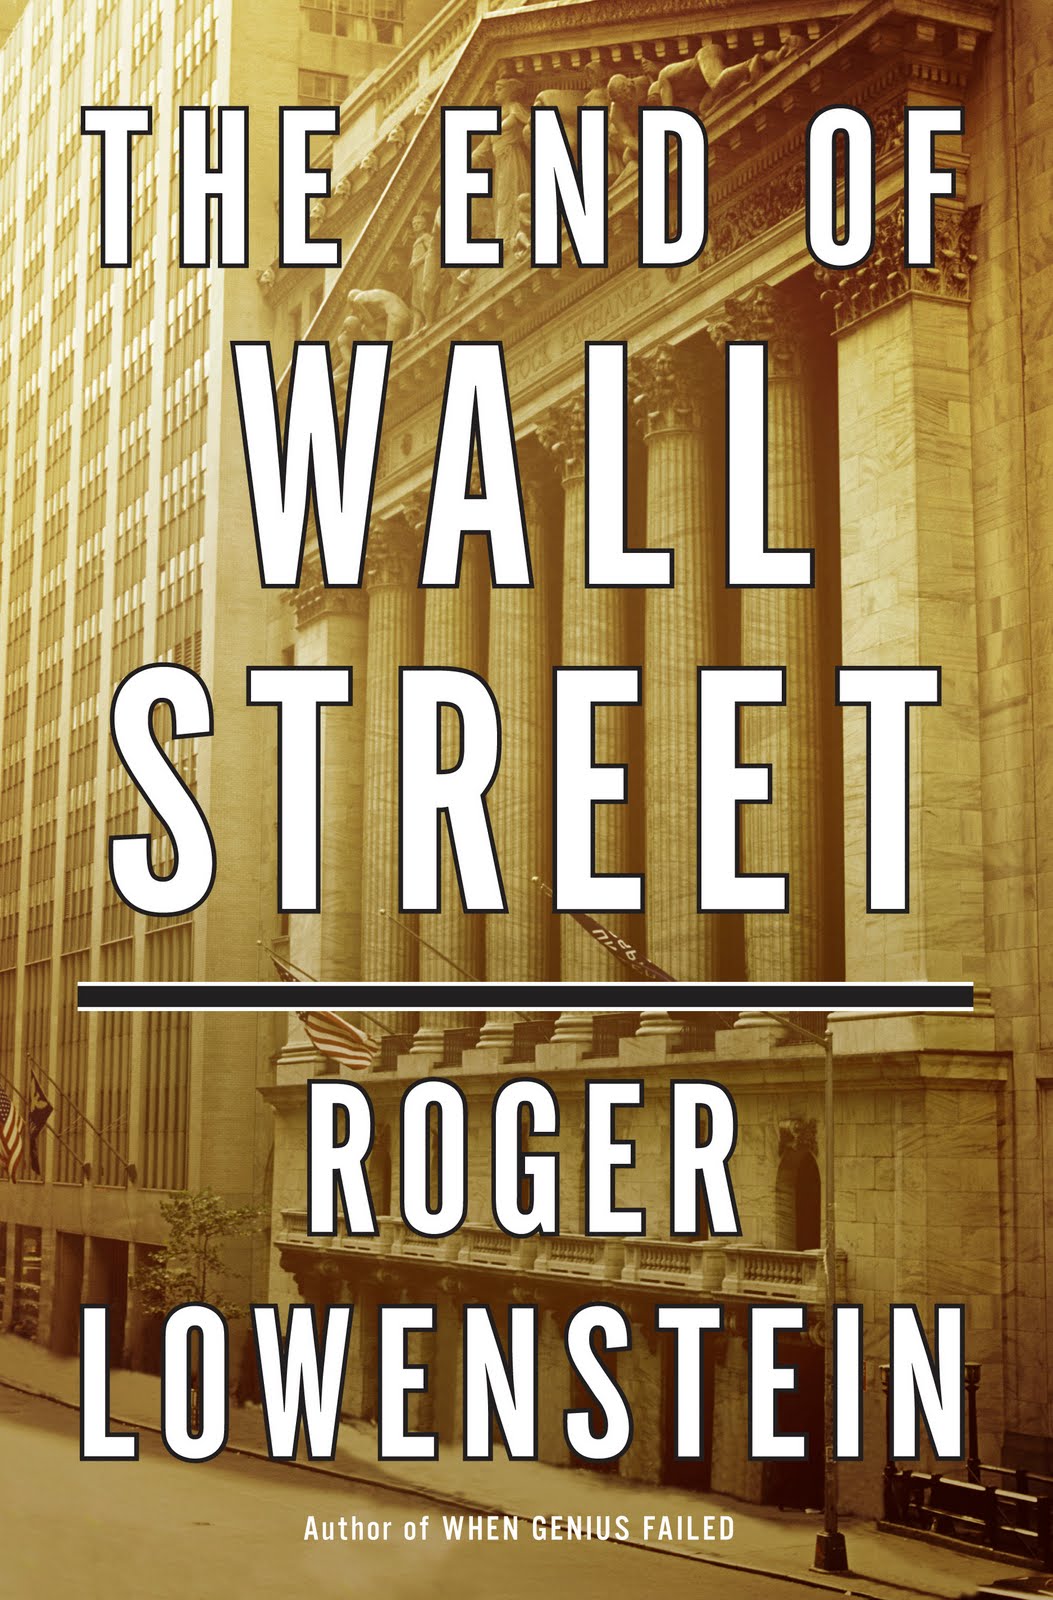 'The End of Wall Street' by Roger Lowenstein (ISBN B0053U7DQG)